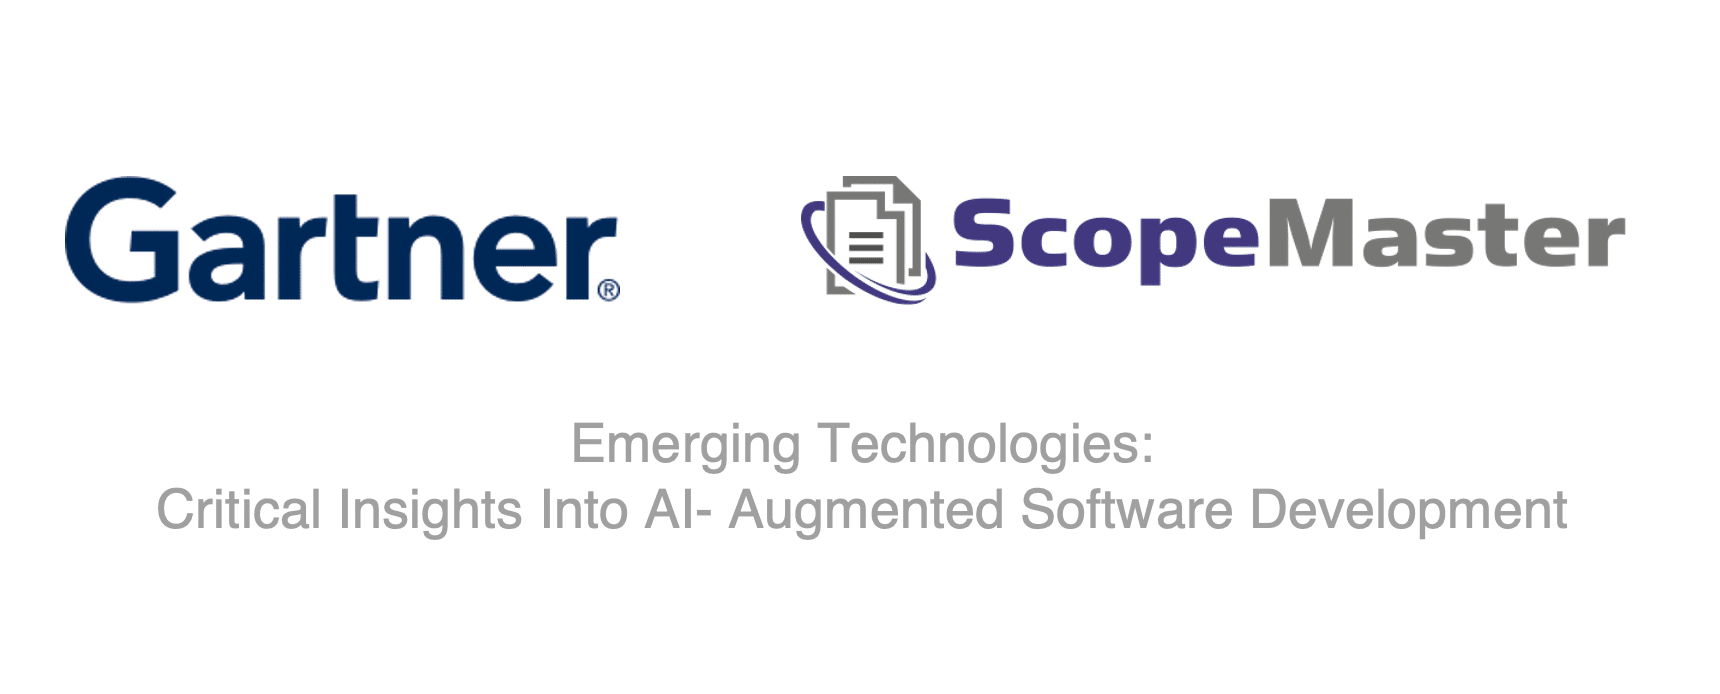 Gartner features ScopeMaster in AI-augmented software development